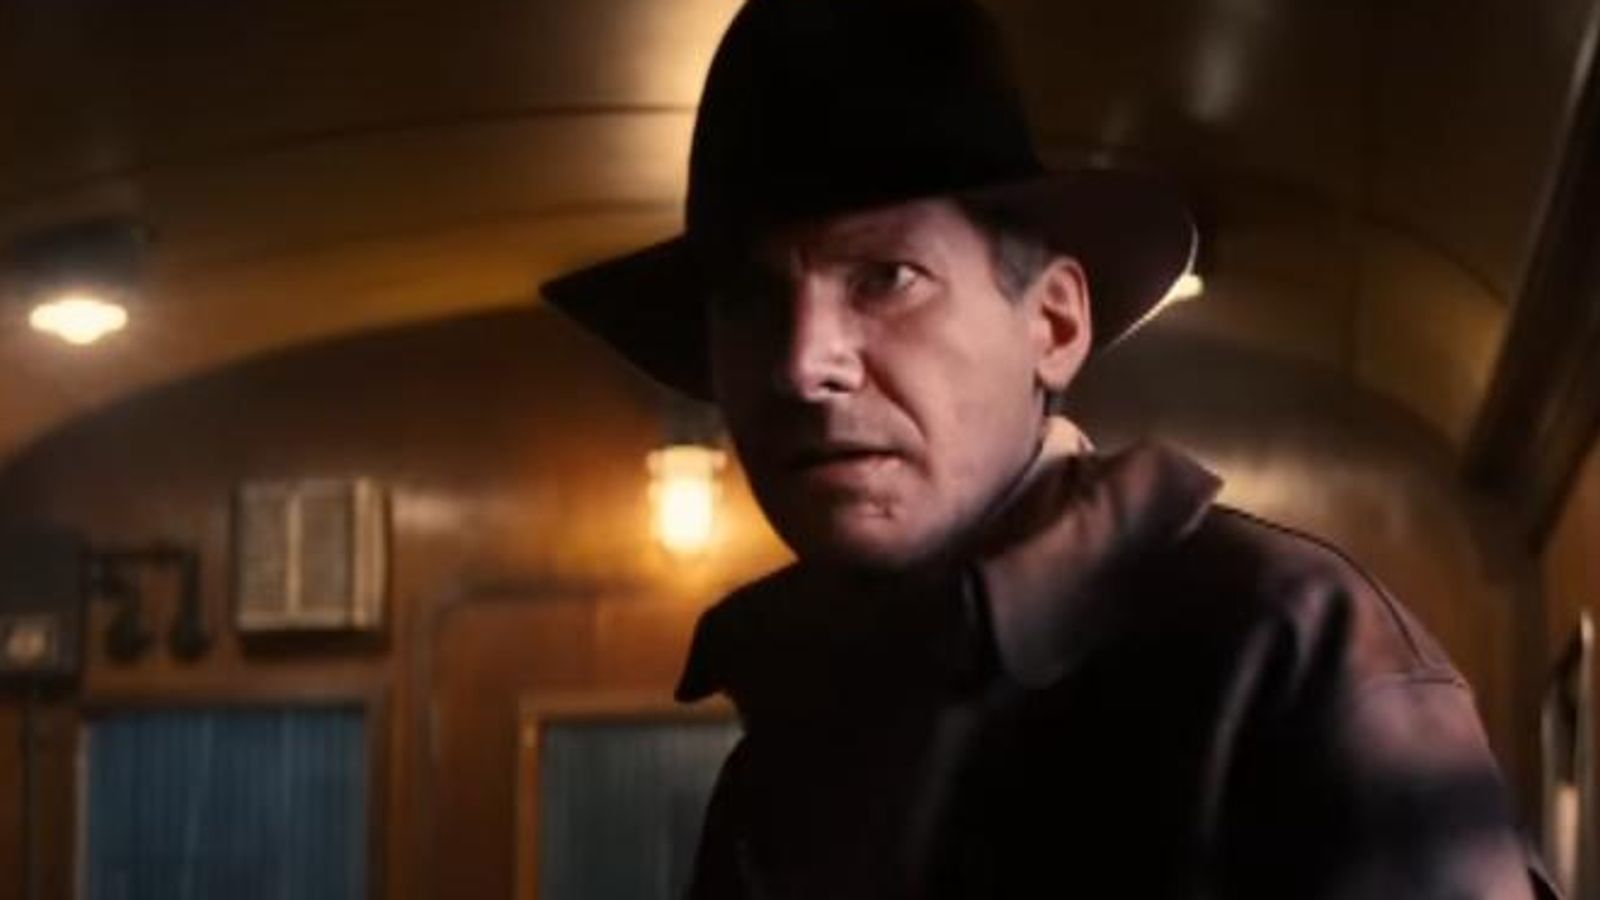 Ken Grant Viral Indiana Jones Trailer Analysis